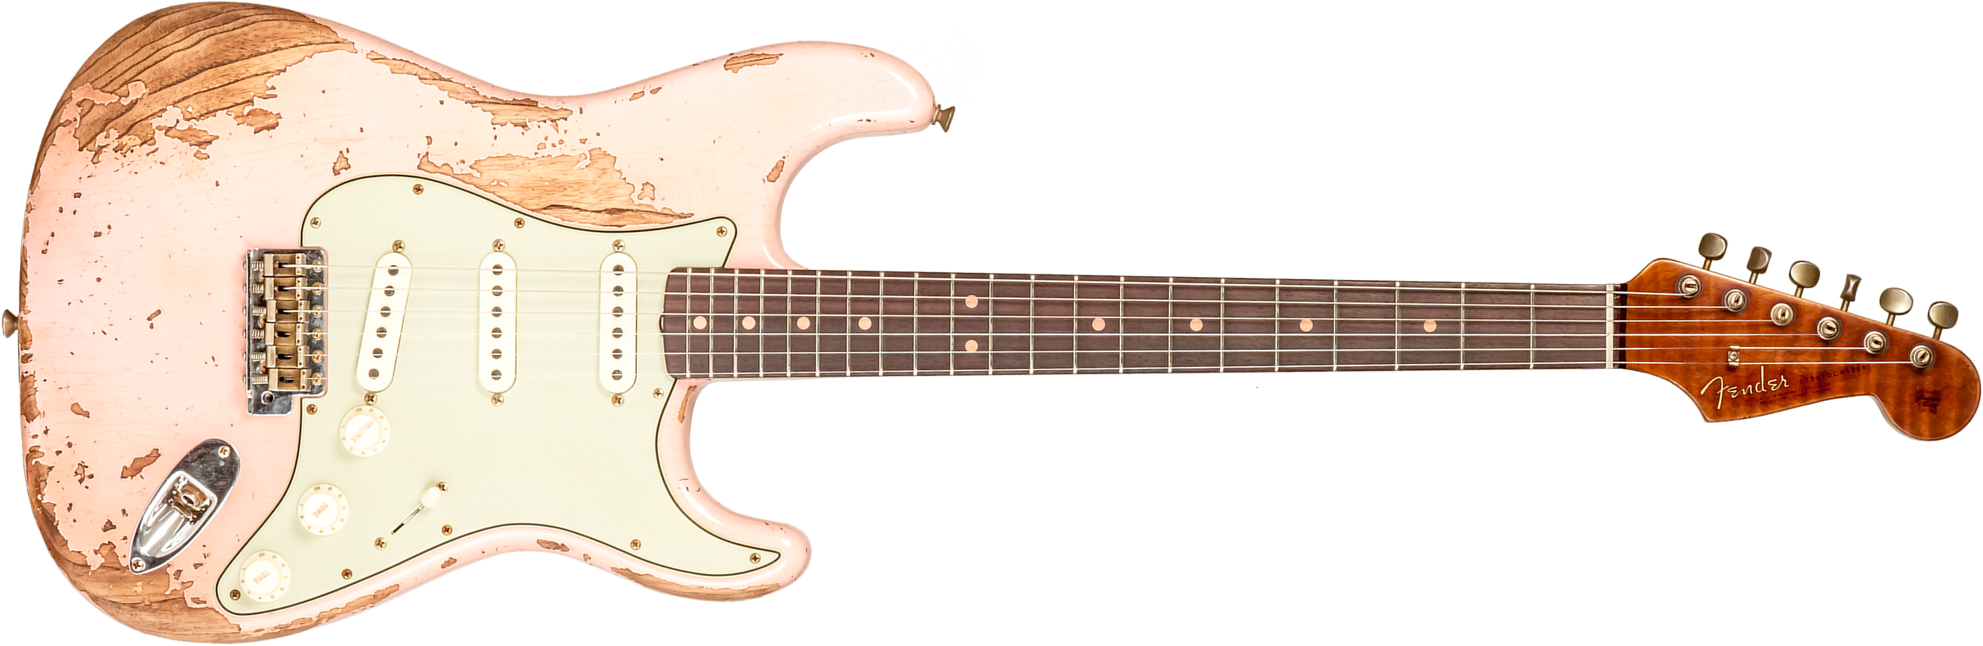 Fender Custom Shop Strat 1963 3s Trem Rw #r136150 - Super Heavy Relic Shell Pink - Str shape electric guitar - Main picture